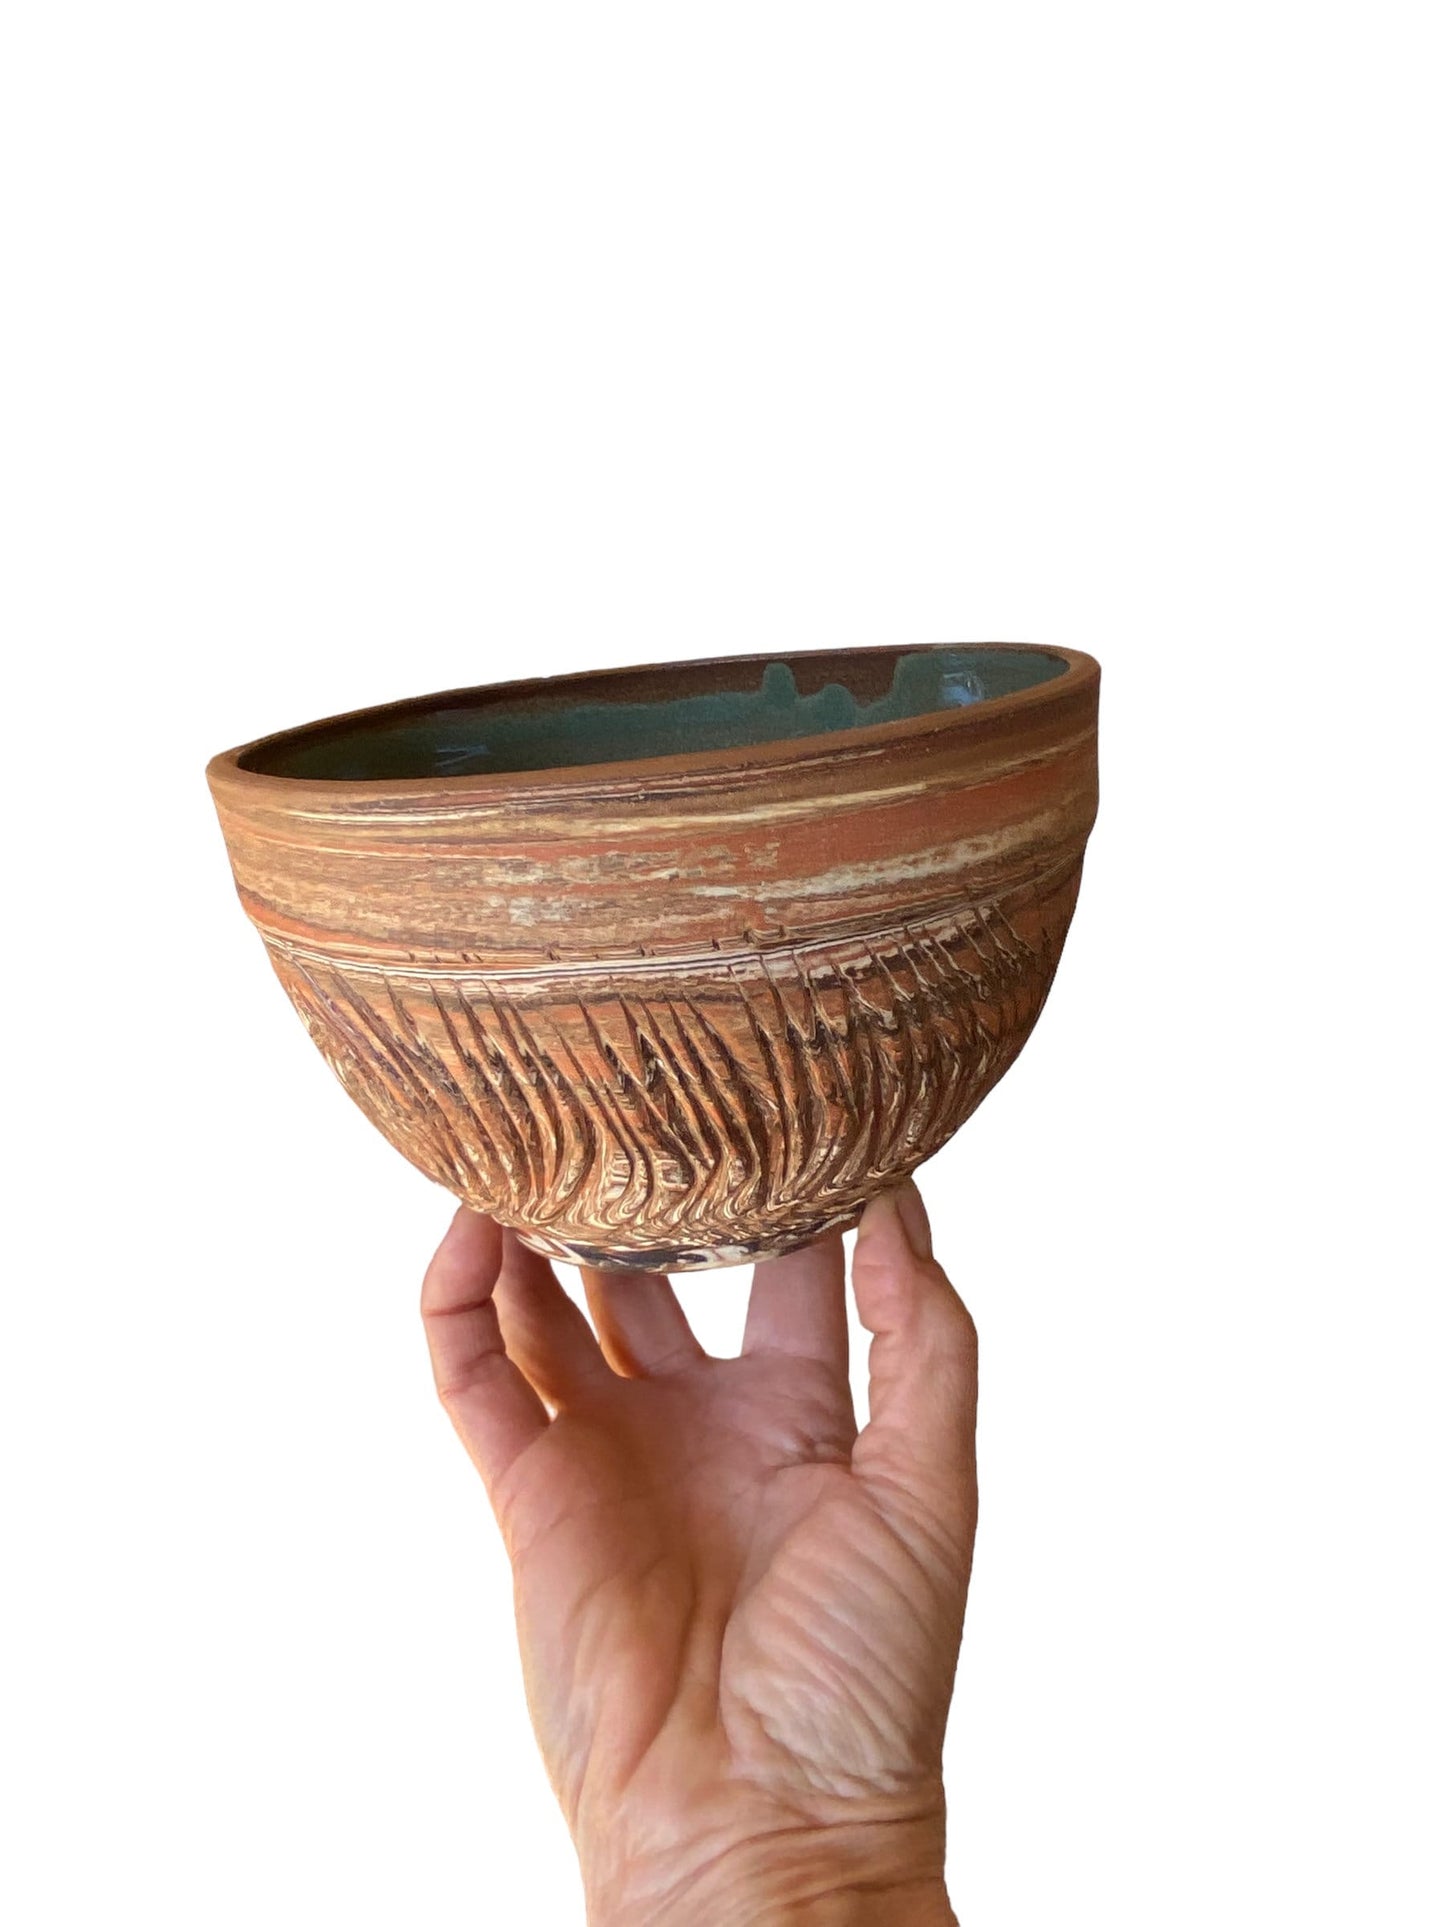 Small Agateware Bowl